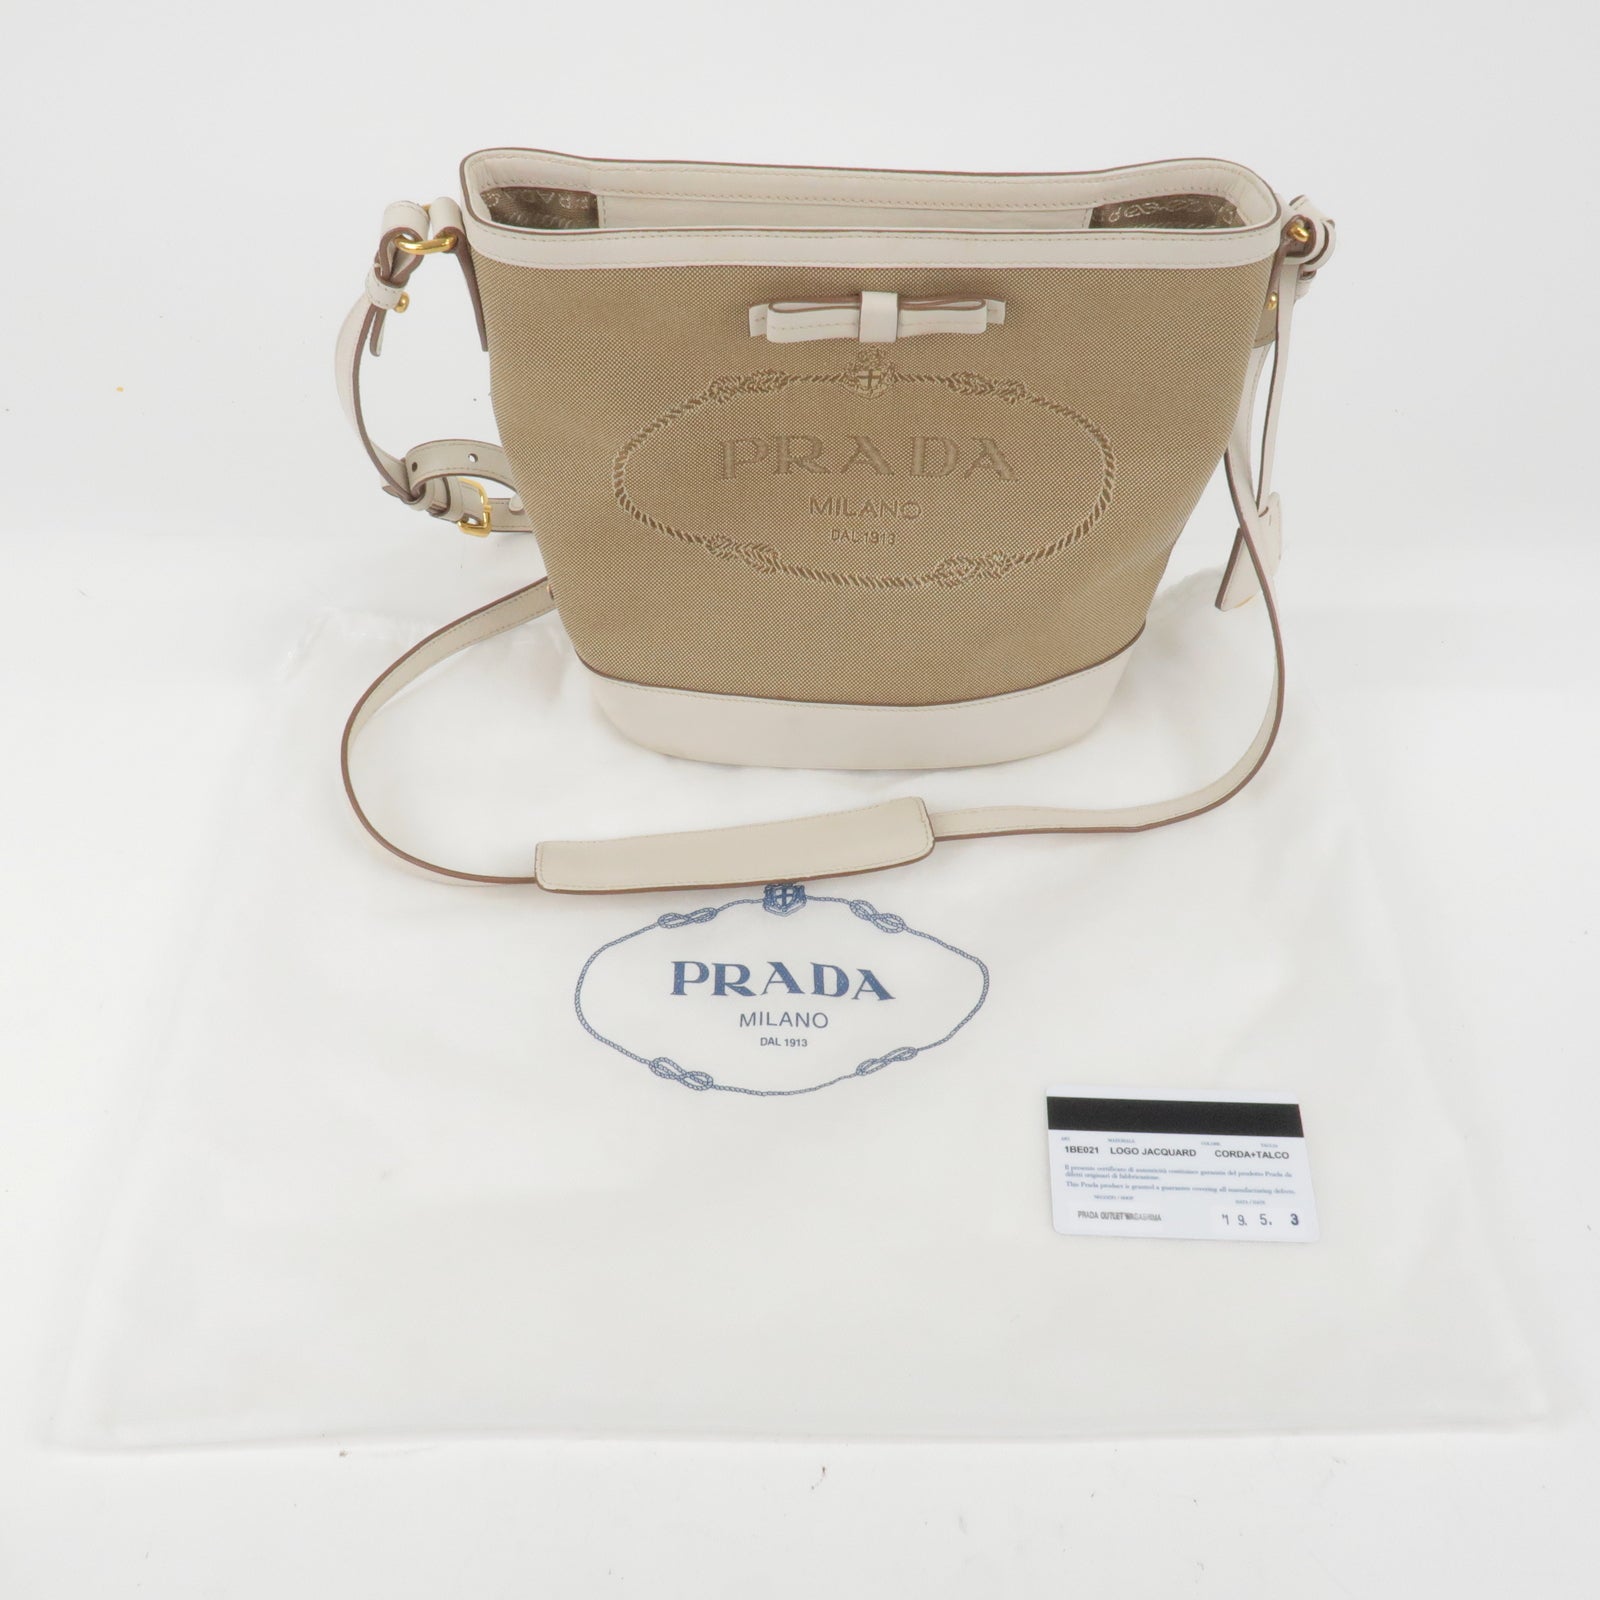 Louis-Vuitton-Set-of-20-Small-Dust-Bag-Beige – dct-ep_vintage luxury Store